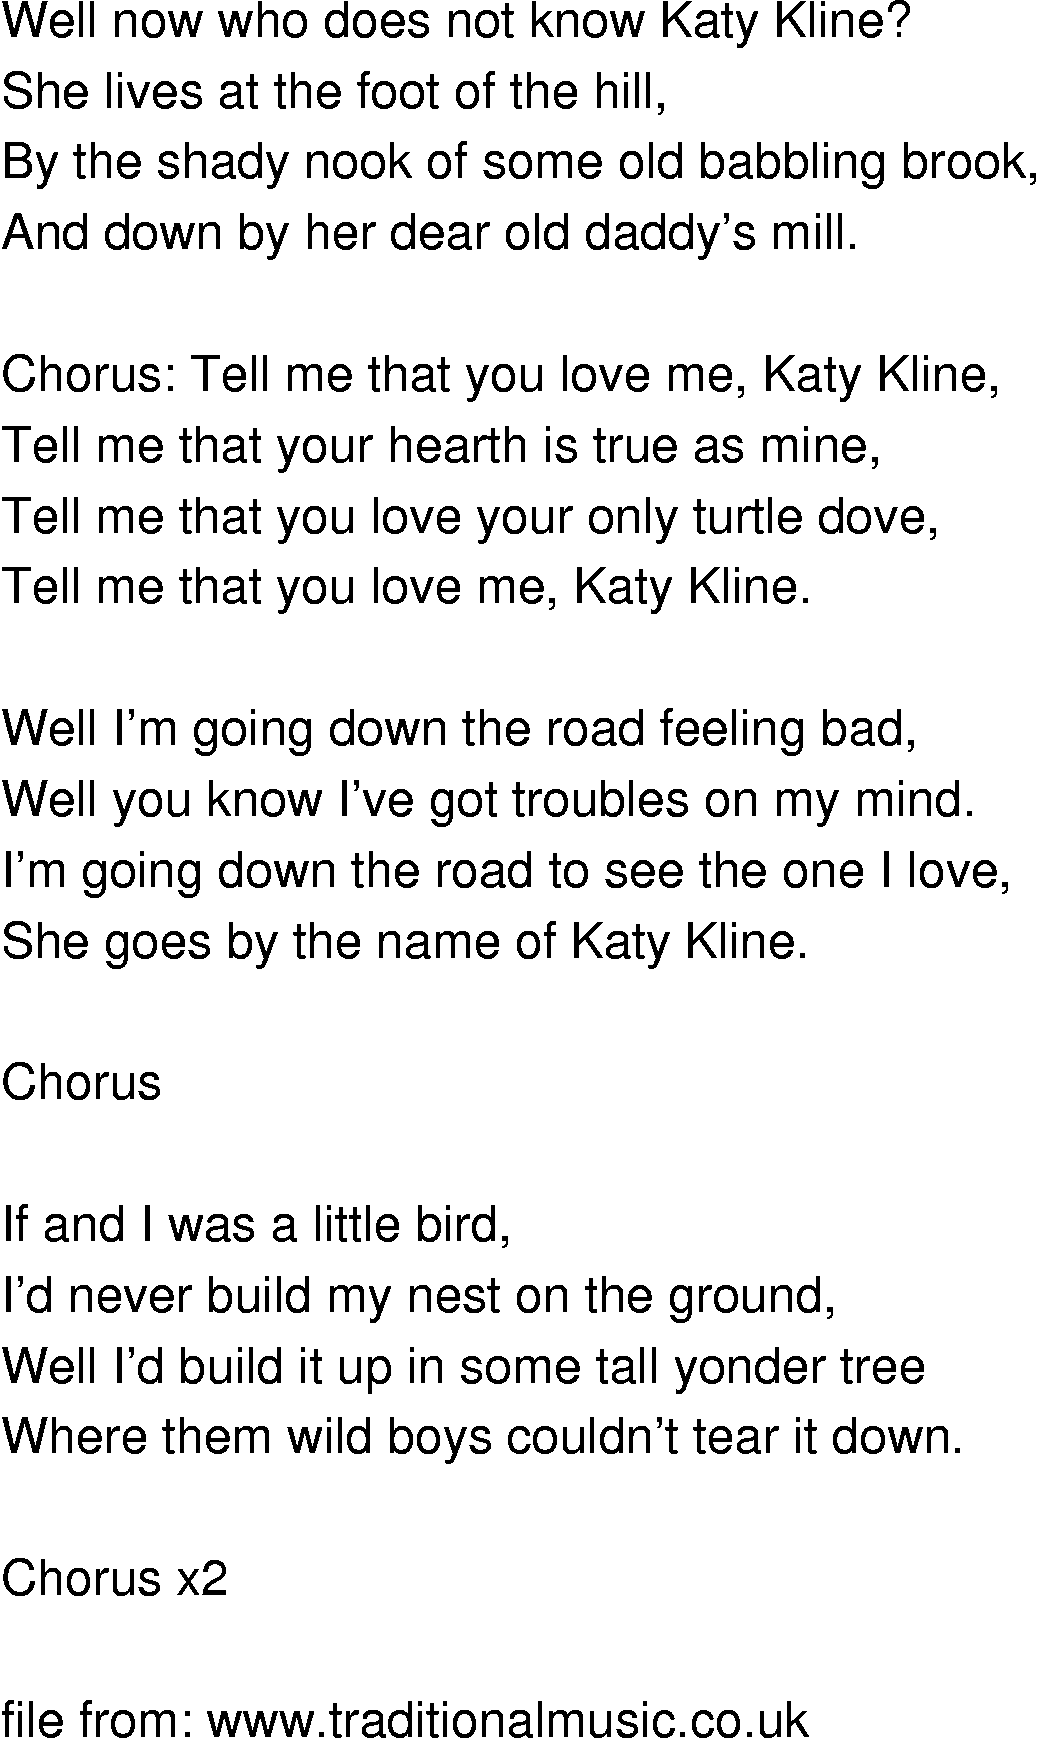 Old-Time (oldtimey) Song Lyrics - katy cline